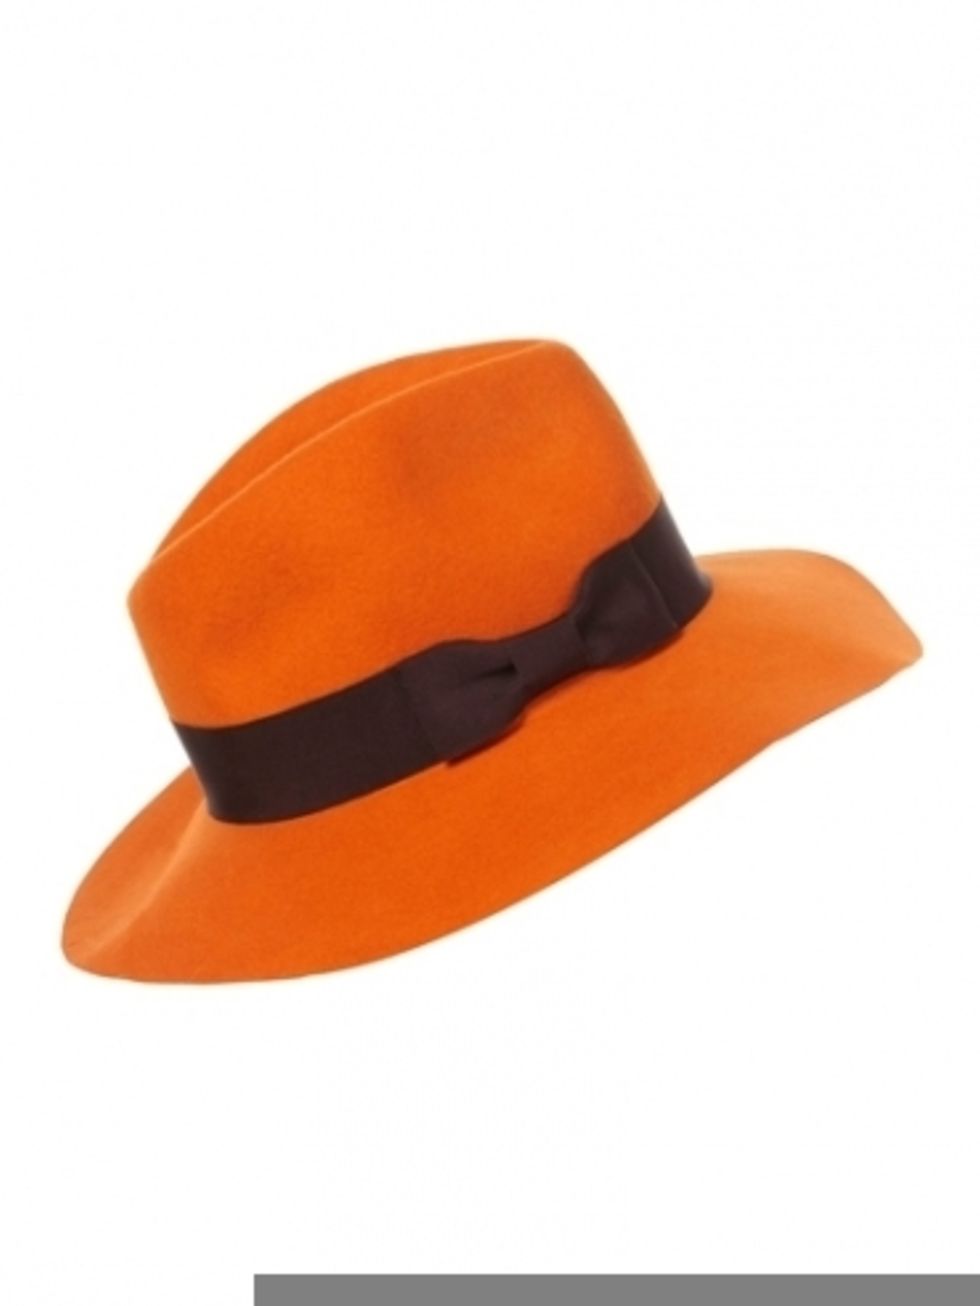 Orange, Headgear, Costume accessory, Tan, Maroon, Costume hat, Coquelicot, Costume, 